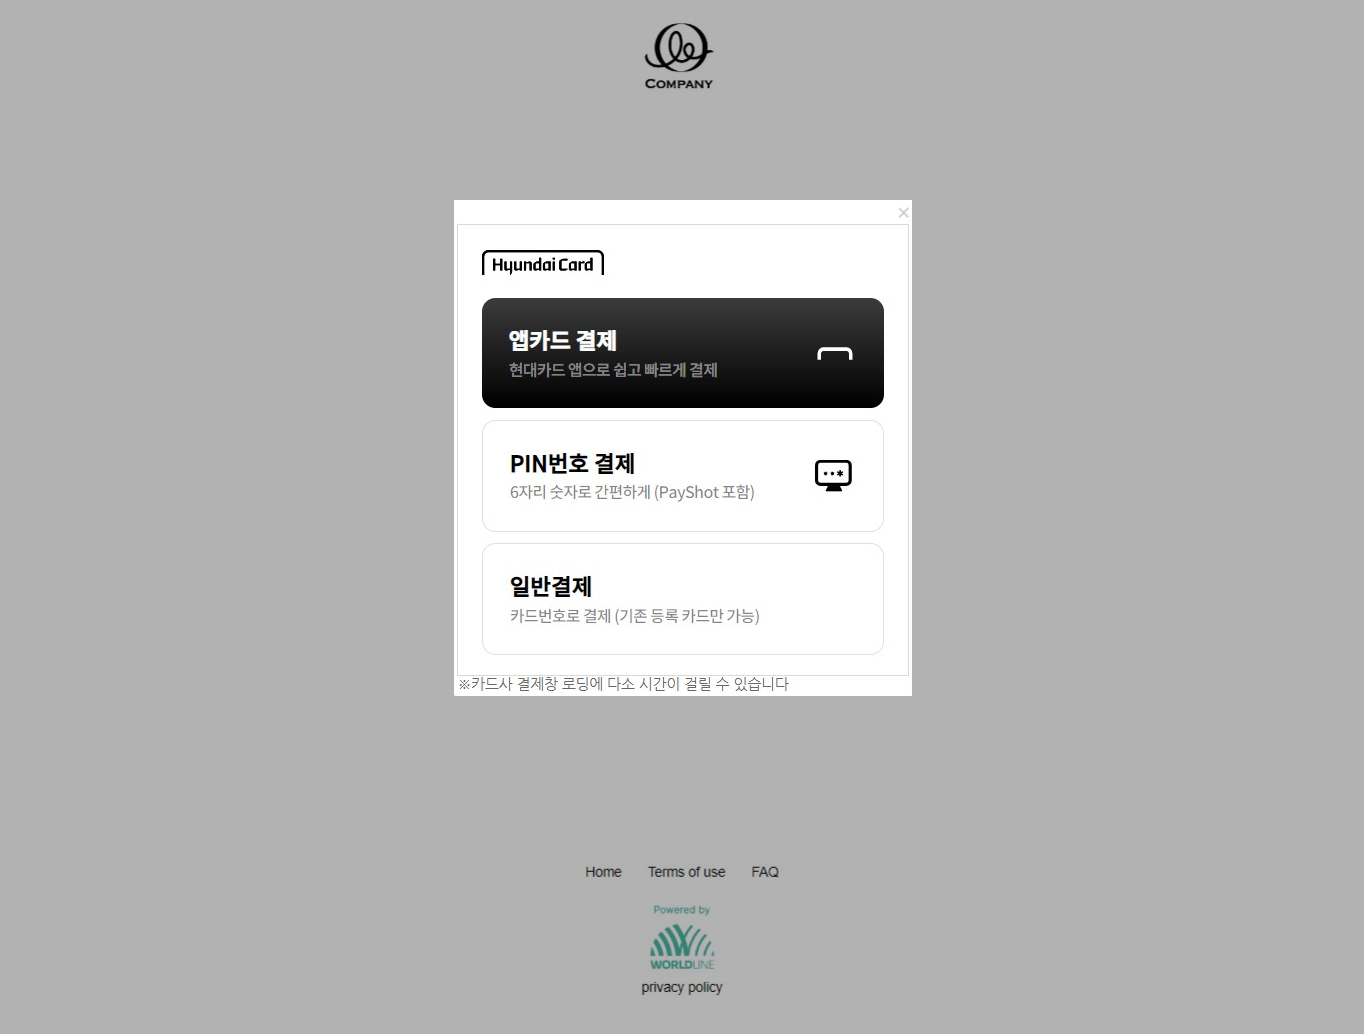 hyundai-card-authenticated-consumer-experience-desktop-flow-02